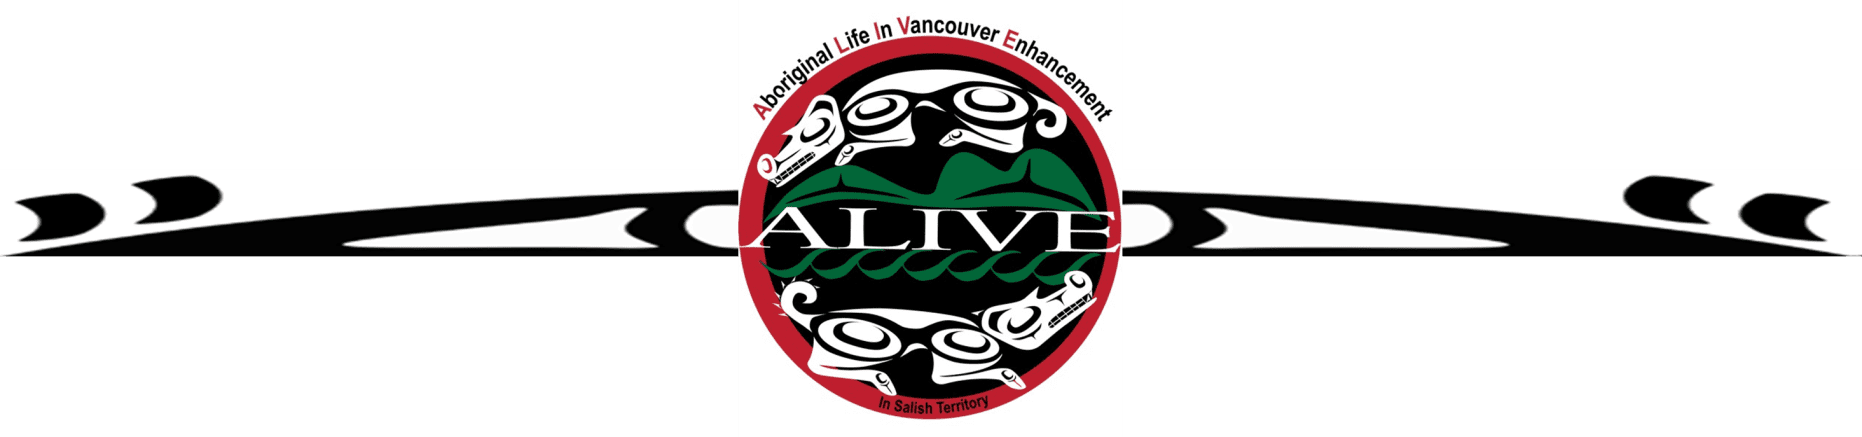 Aboriginal Life in Vancouver Enhancement Society